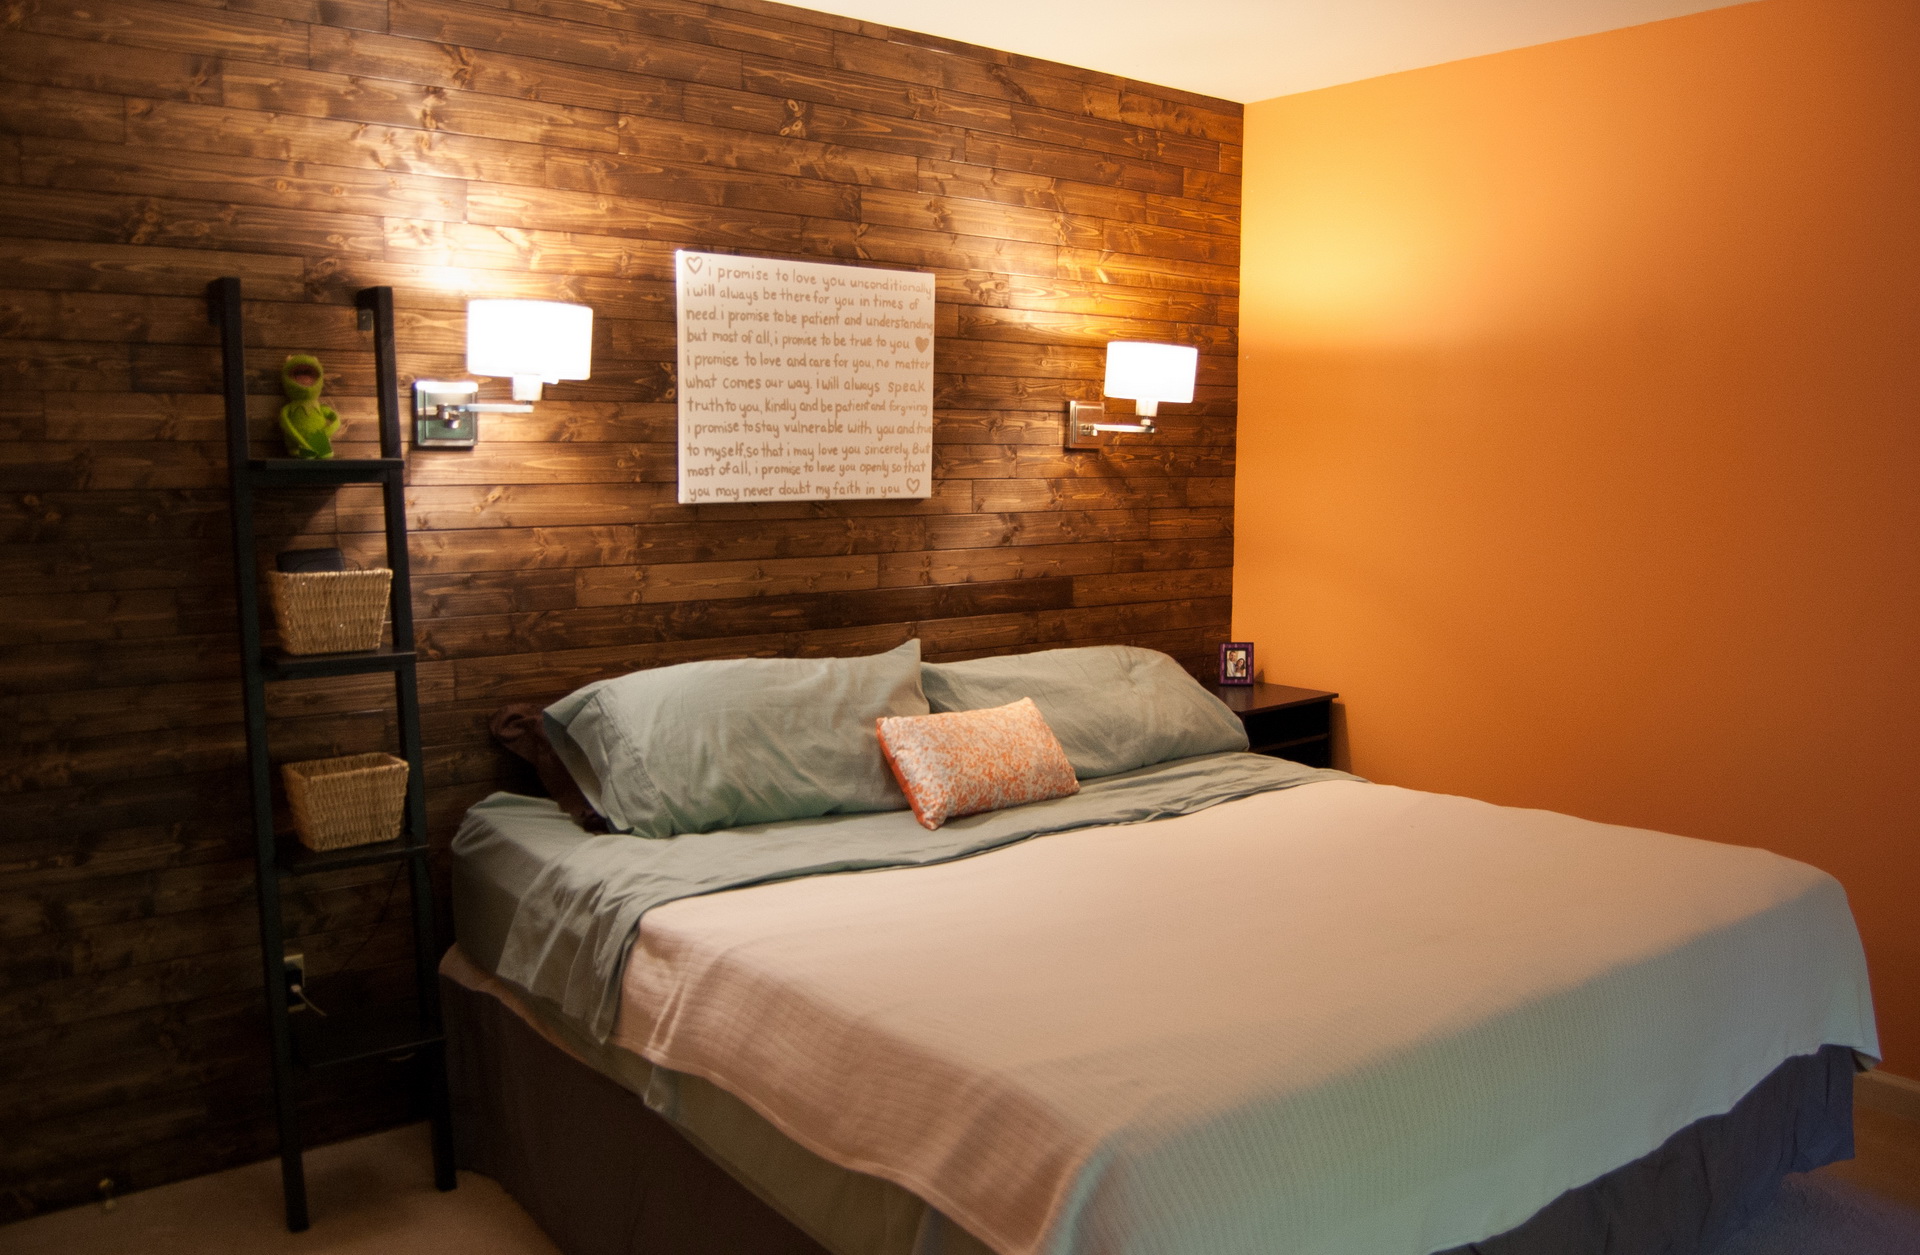 Bedside wall lights - Enhance Your Bedroom Decor ...